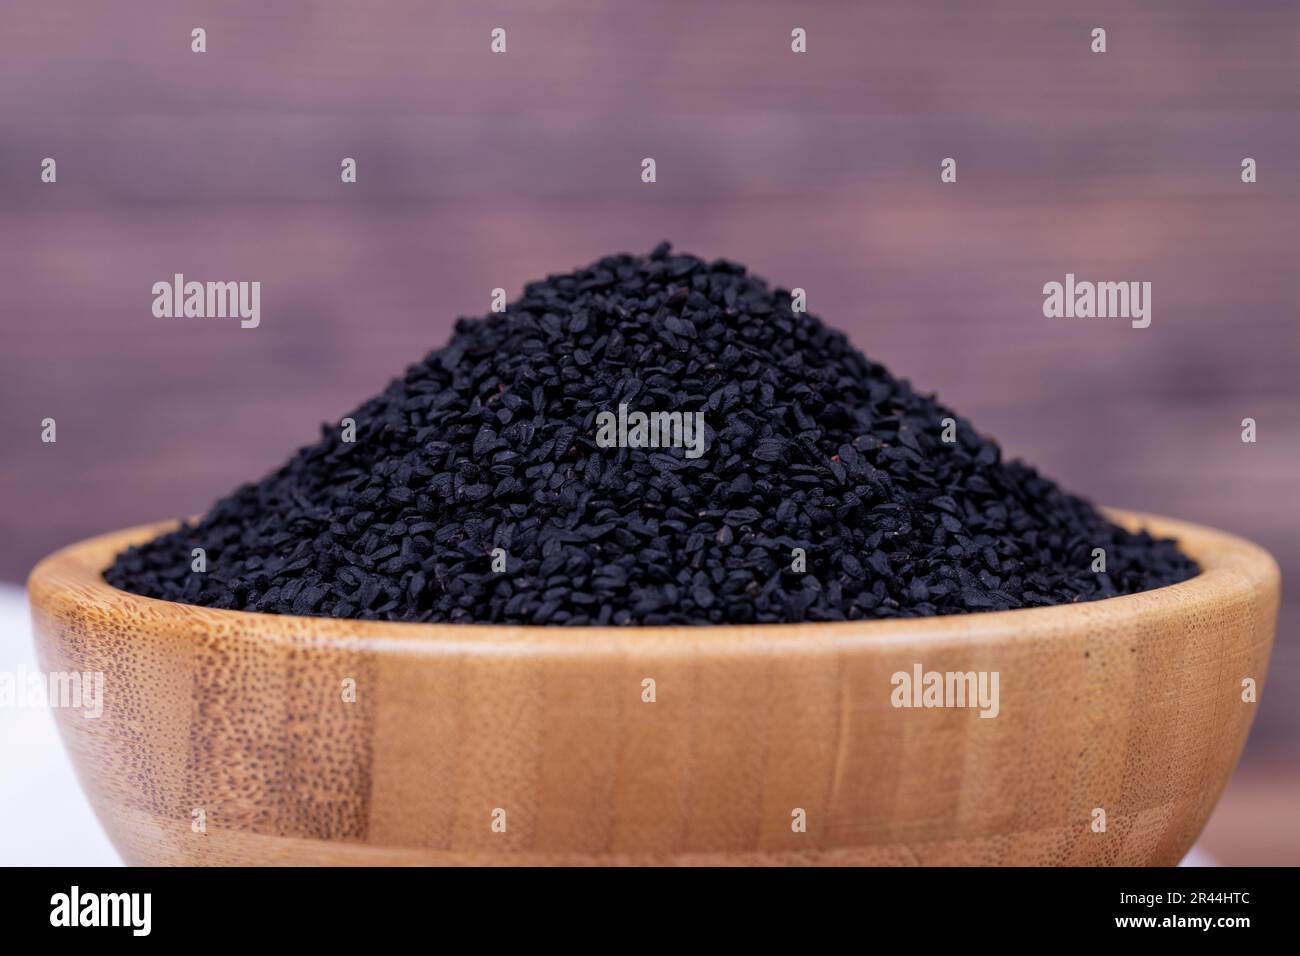 Black cumin or nigella sativa on wooden background. Black cumin seeds in wooden bowl. Kalonji, nigella, black cumin. Close up Stock Photo